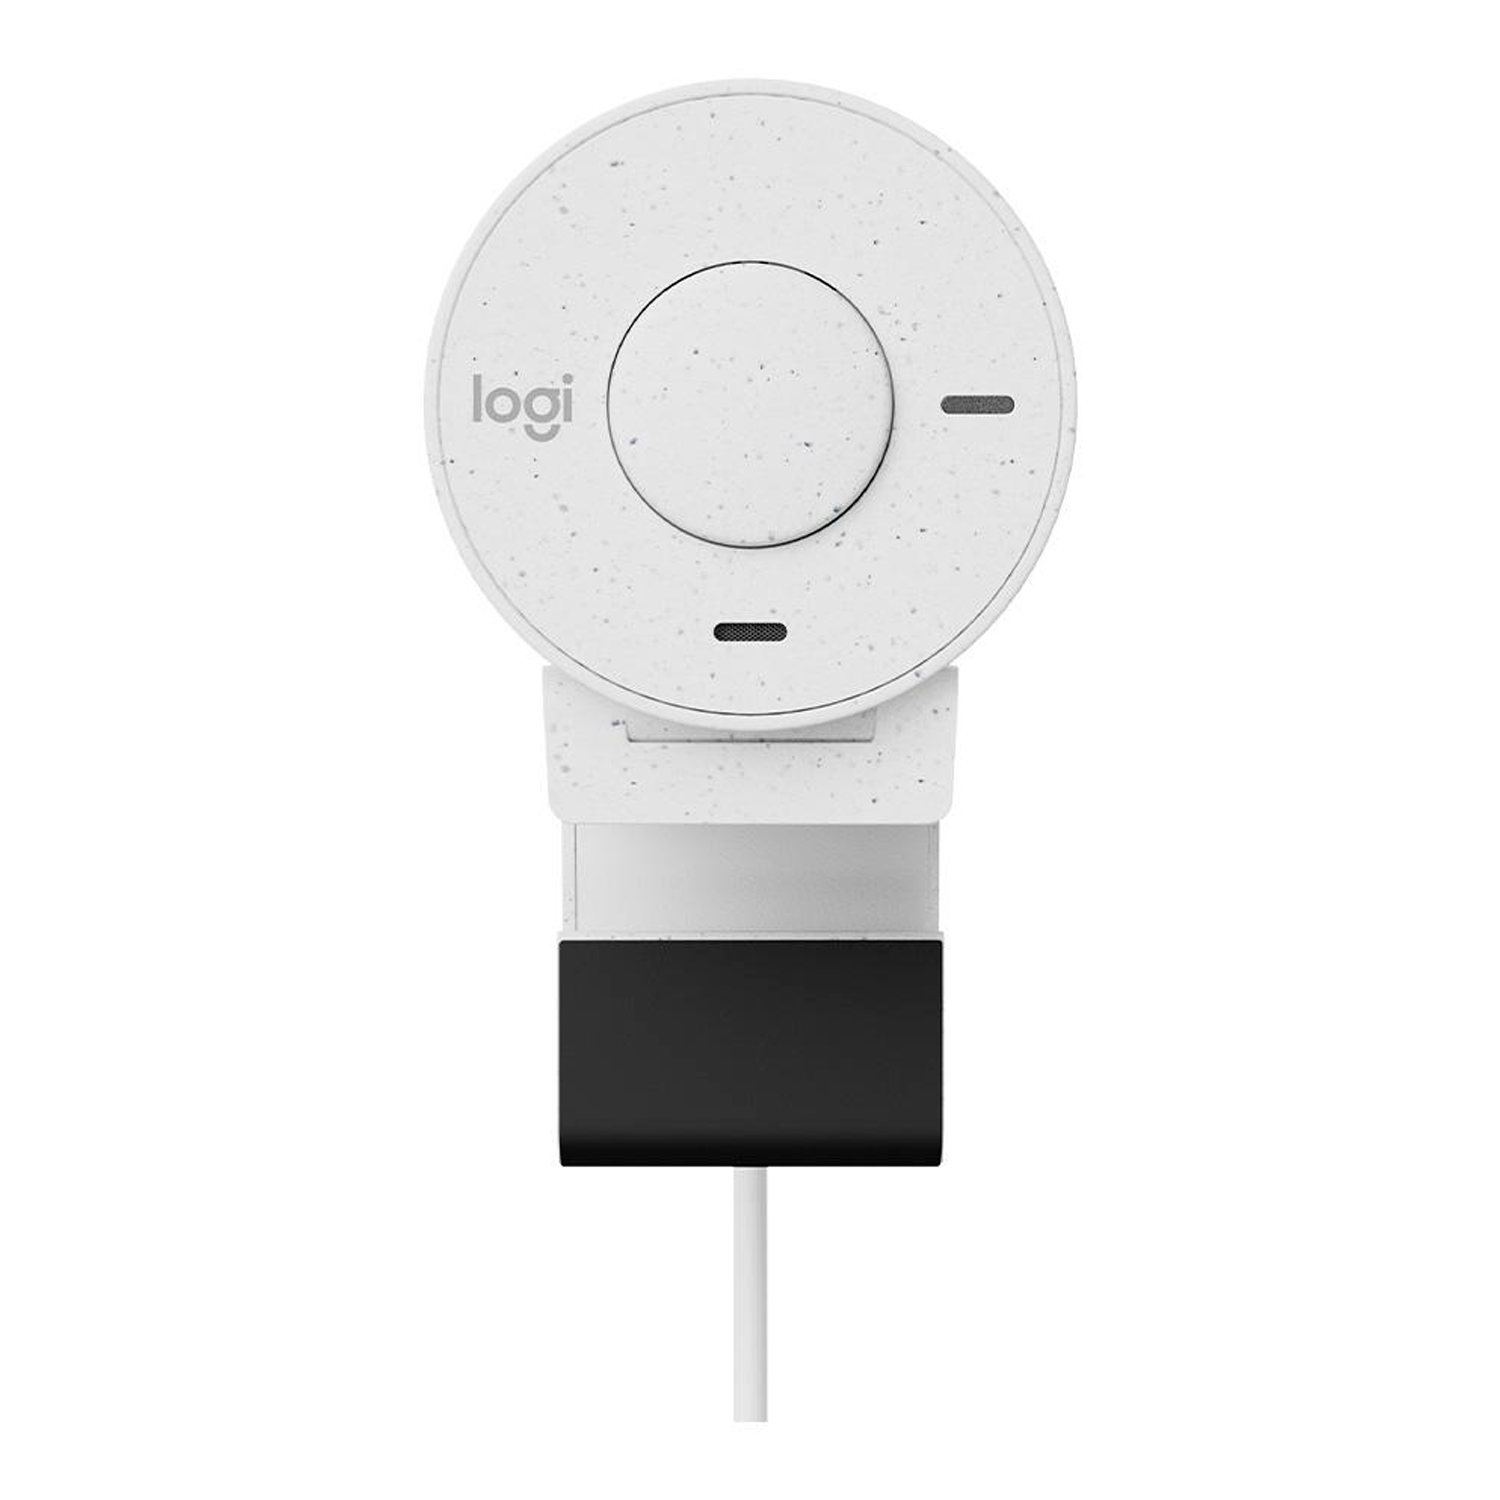 Webcam Logitech Brio 300 - Branco (960-001440)